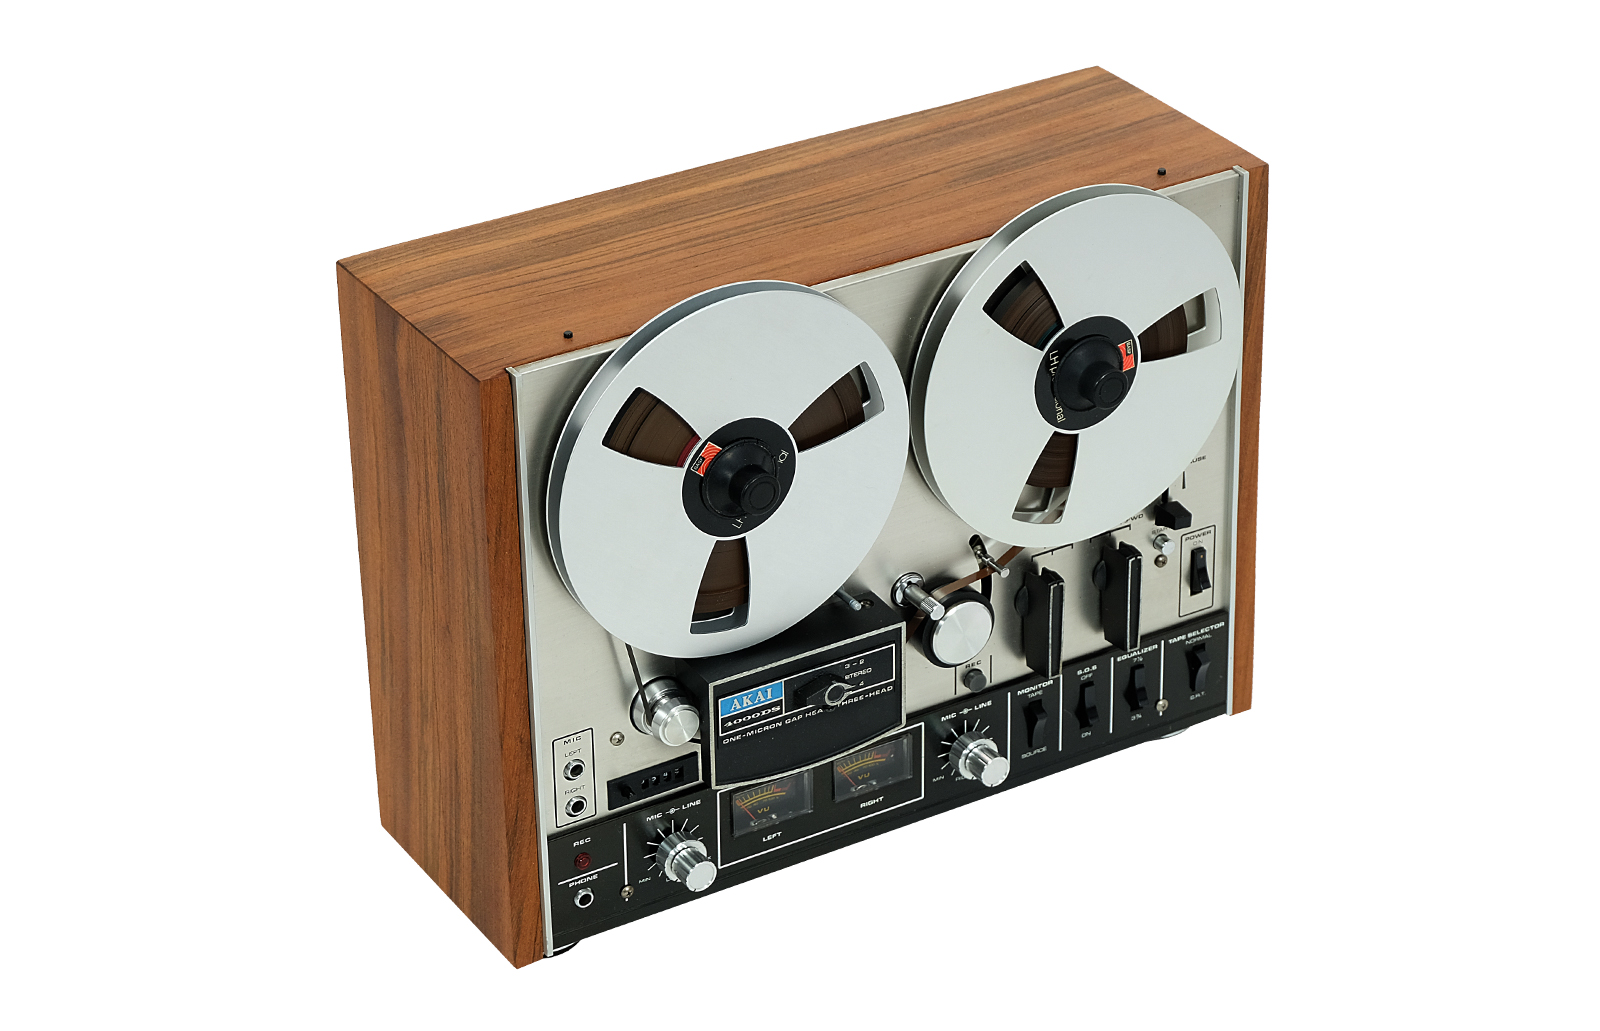 AKAI 4000 DS reel-to-reel tape recorder